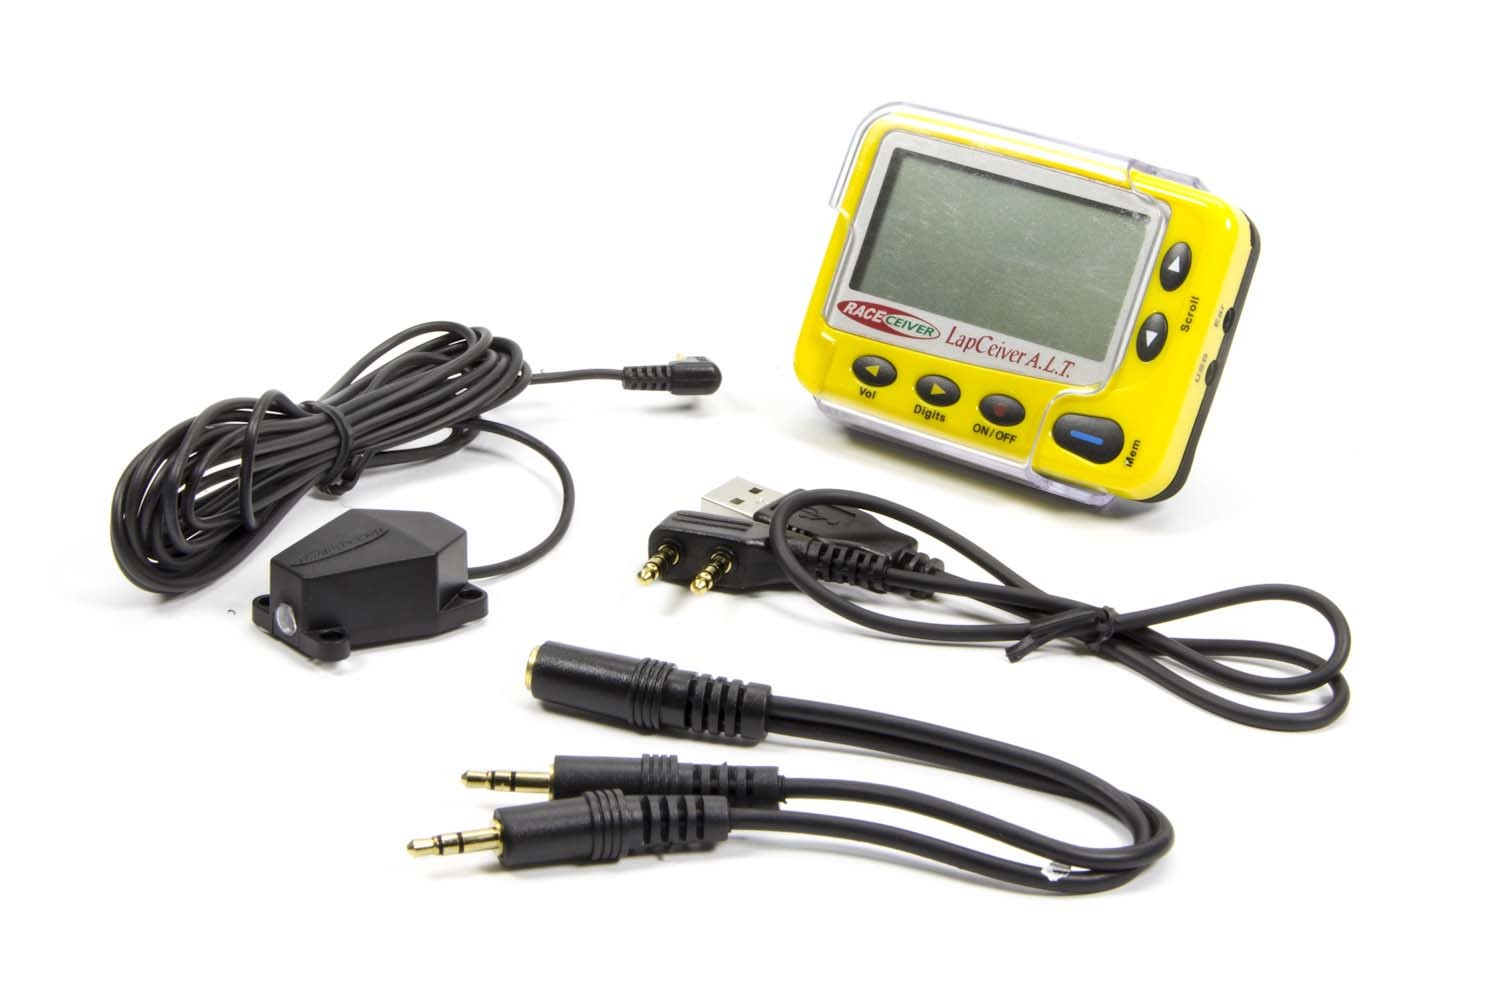 Raceceiver LAP-ALT-100 - Lap Time Receiver, LAPceiver A.L.T., LCD Screen, Audible Lap Times, Holster / Headphone Splitter / IR Detector / USB Cord, Plastic, Yellow, Kit